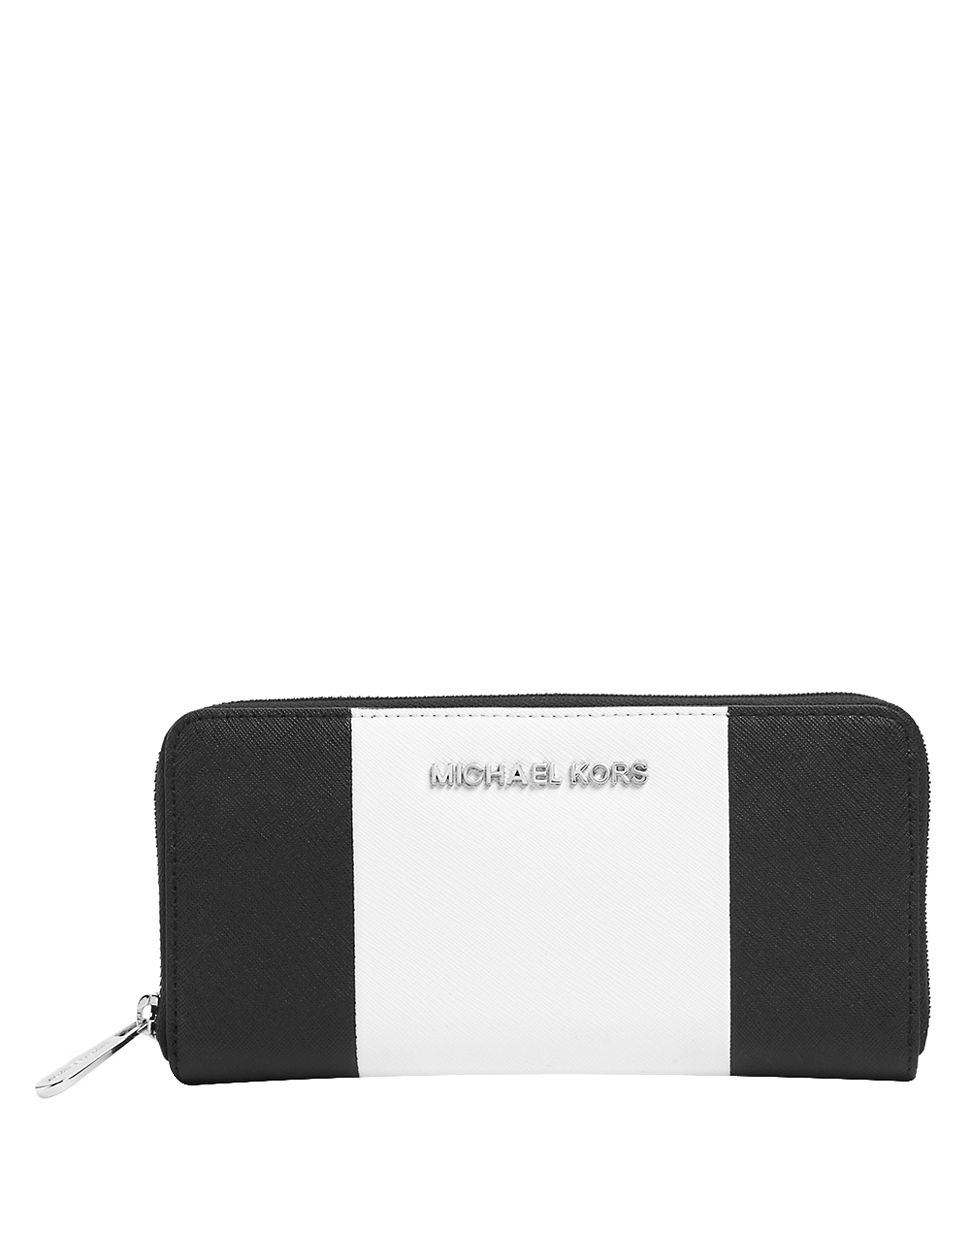 Michael Michael Kors Jet Set Leather Colorblock Continental Wallet in Black (Black/Optic White ...